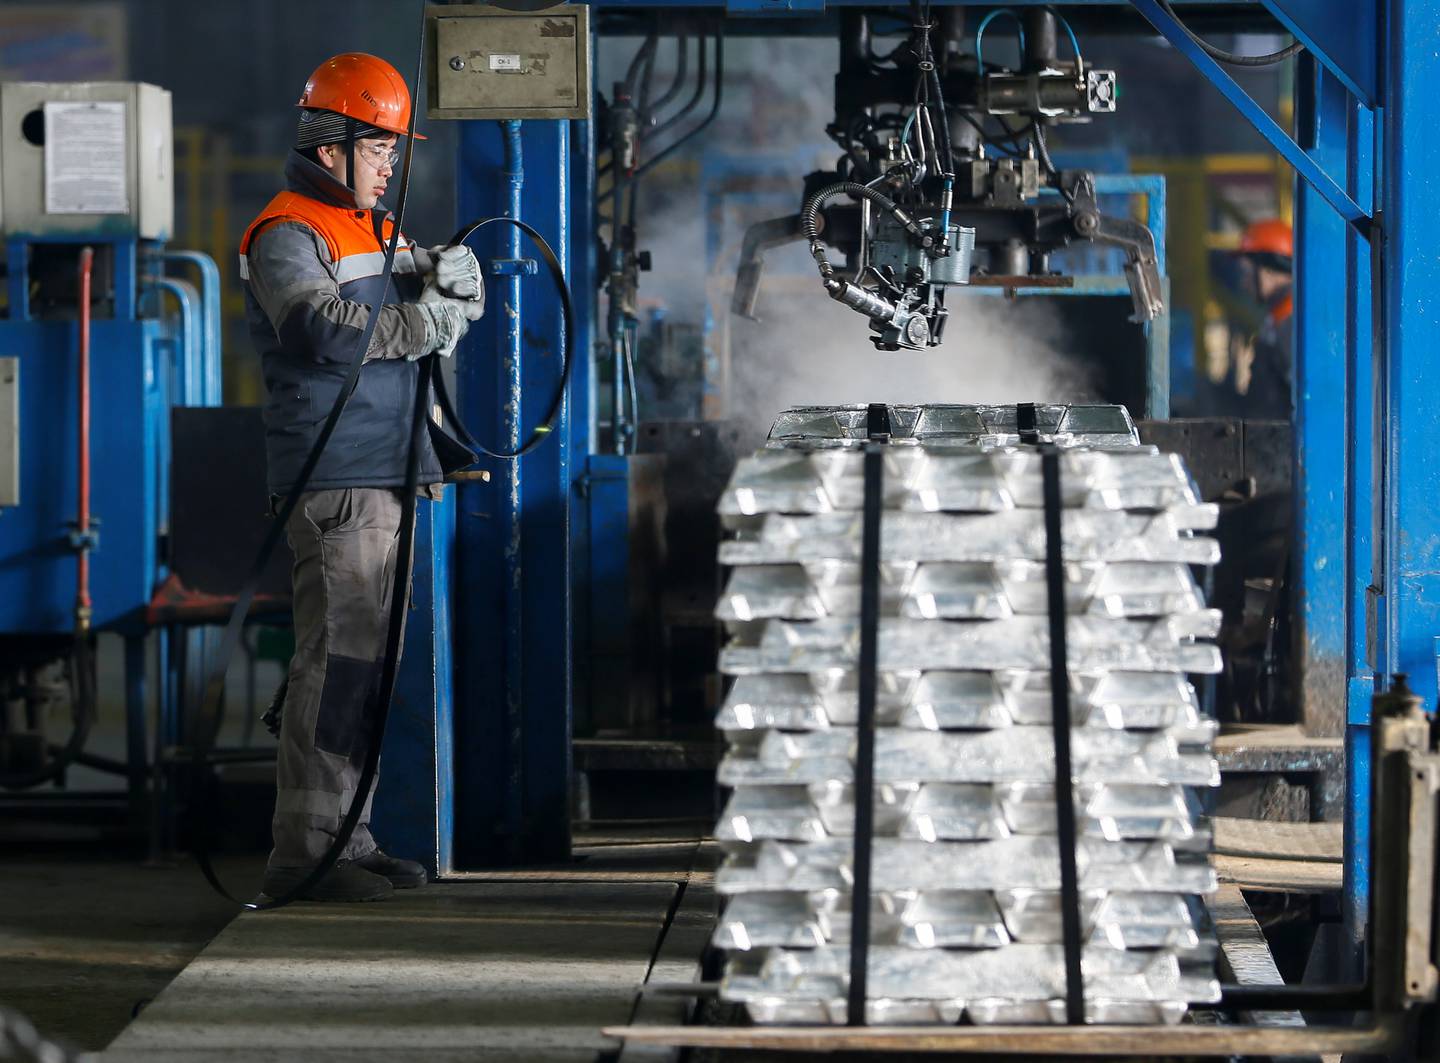 A worker packs aluminium bars at Kazakh mining company Eurasian Resources Group's (ERG) Kazakhstan Aluminium Smelter JSC (KAS) factory in Pavlodar, Kazakhstan February 20, 2018. Picture taken February 20, 2018. REUTERS/Shamil Zhumatov